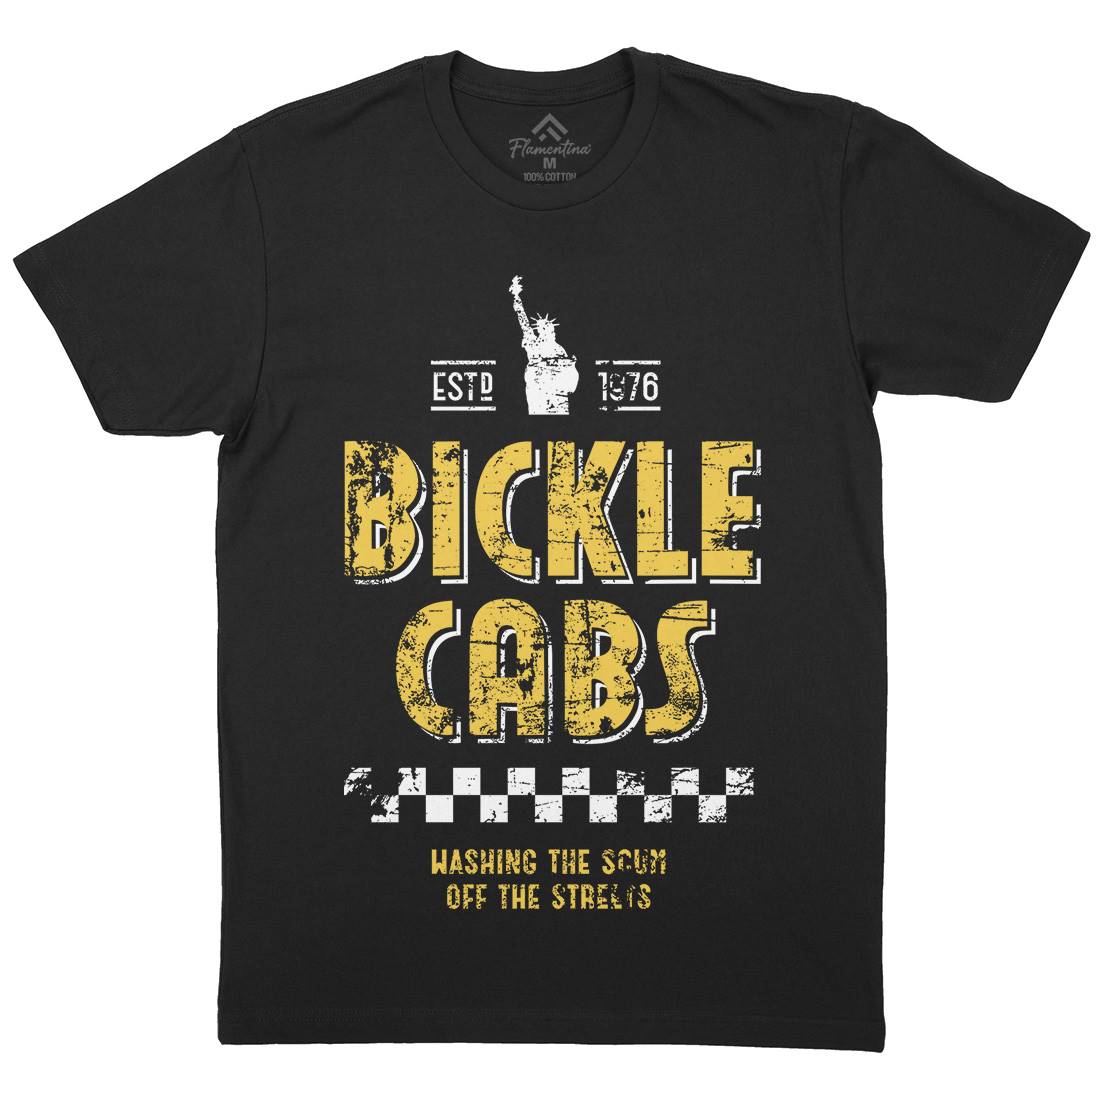 Bickle Cabs Mens Crew Neck T-Shirt Retro D306